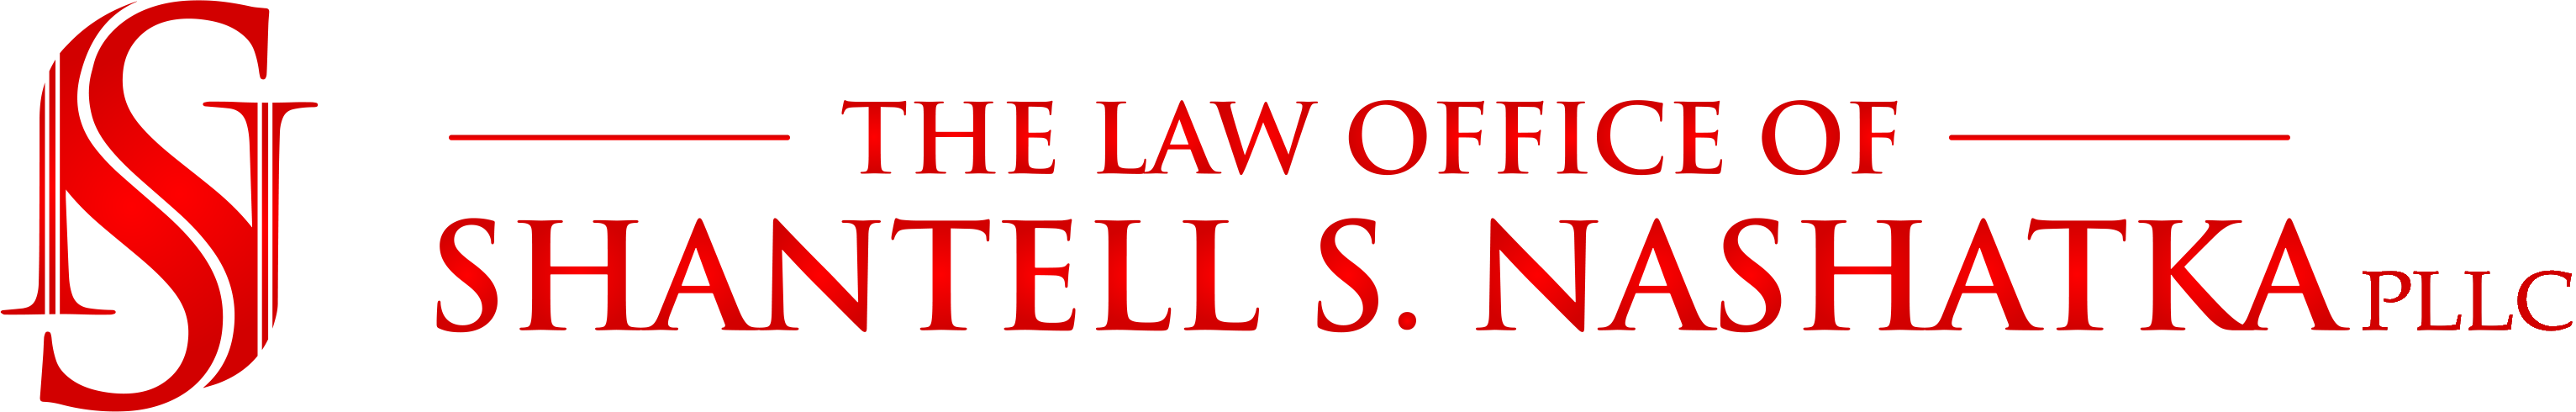 The Law Office of Shantell S. Nashatka, PLLC